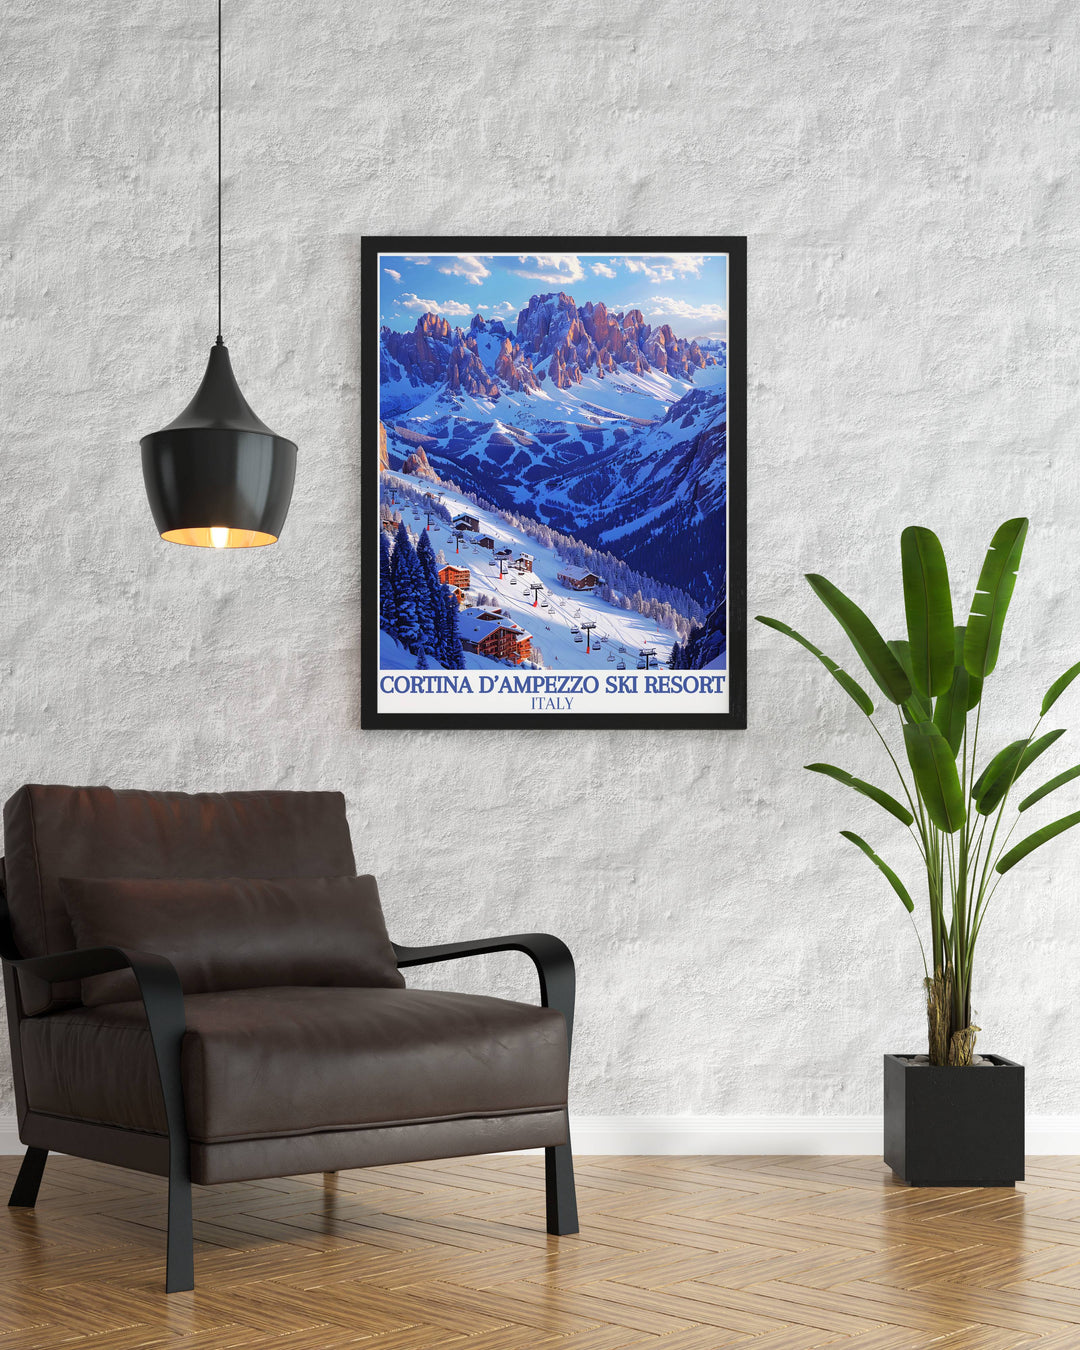 Detailed artwork depicting the active ski life on Tofana slopes, set against the breathtaking backdrop of the Italian Alps